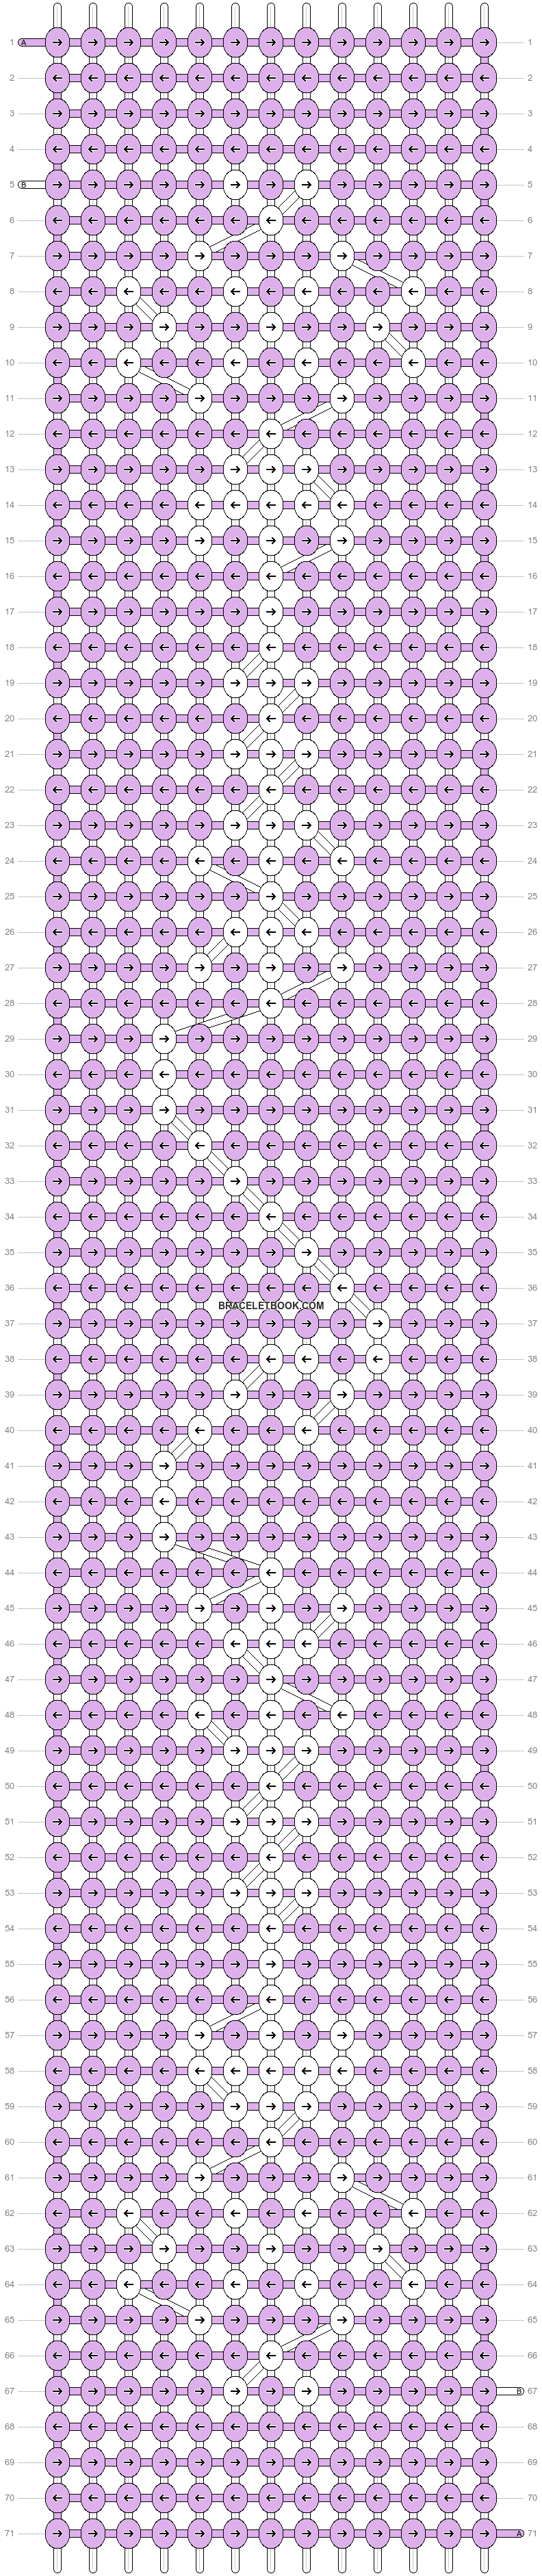 Alpha pattern #57396 variation #100205 pattern